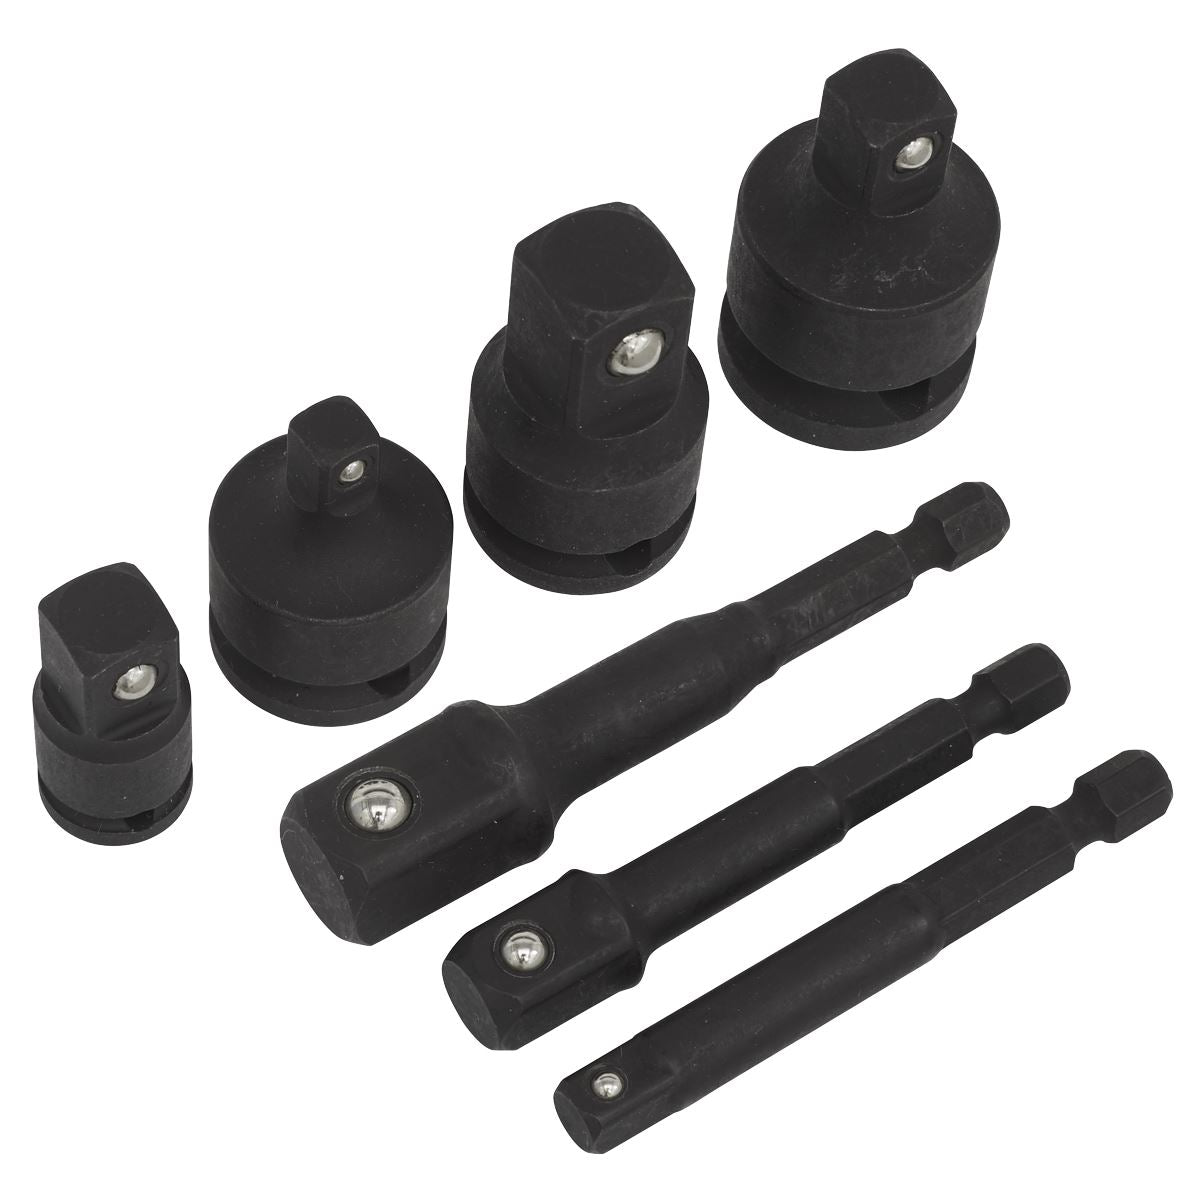 Sealey Impact Socket Adaptor Set 7 Pieces